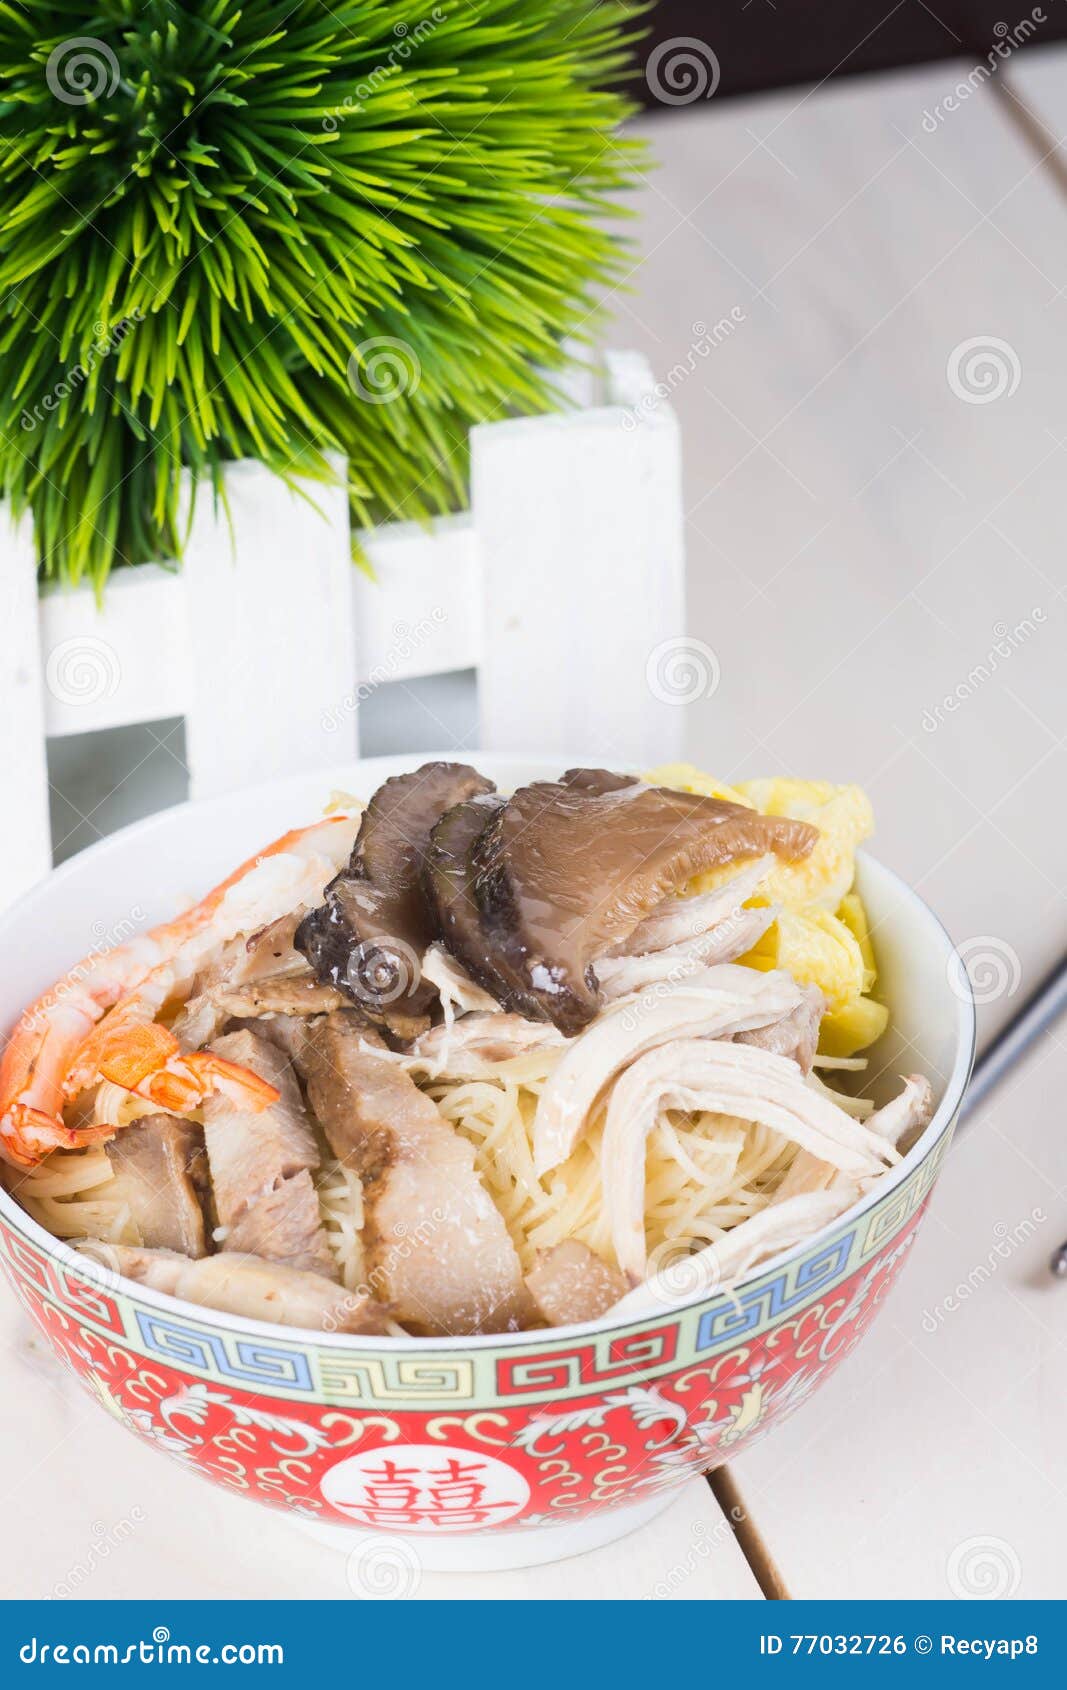 Birthday misua stock photo. Image of chinese, cooking - 77032726